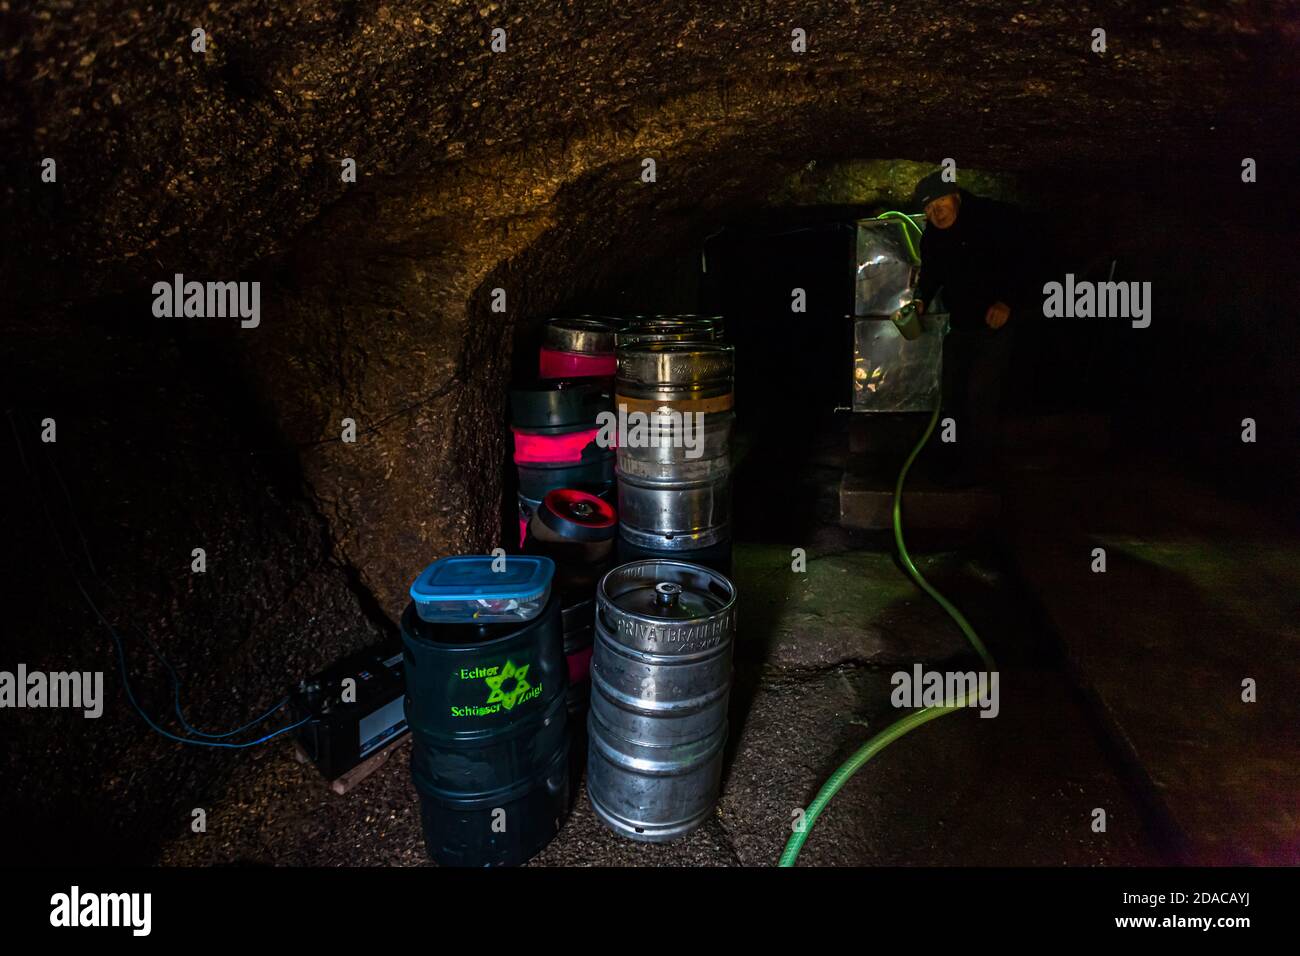 Zoigl-Beer storage in rock-cut cellar in Falkenberg, Germany Stock Photo